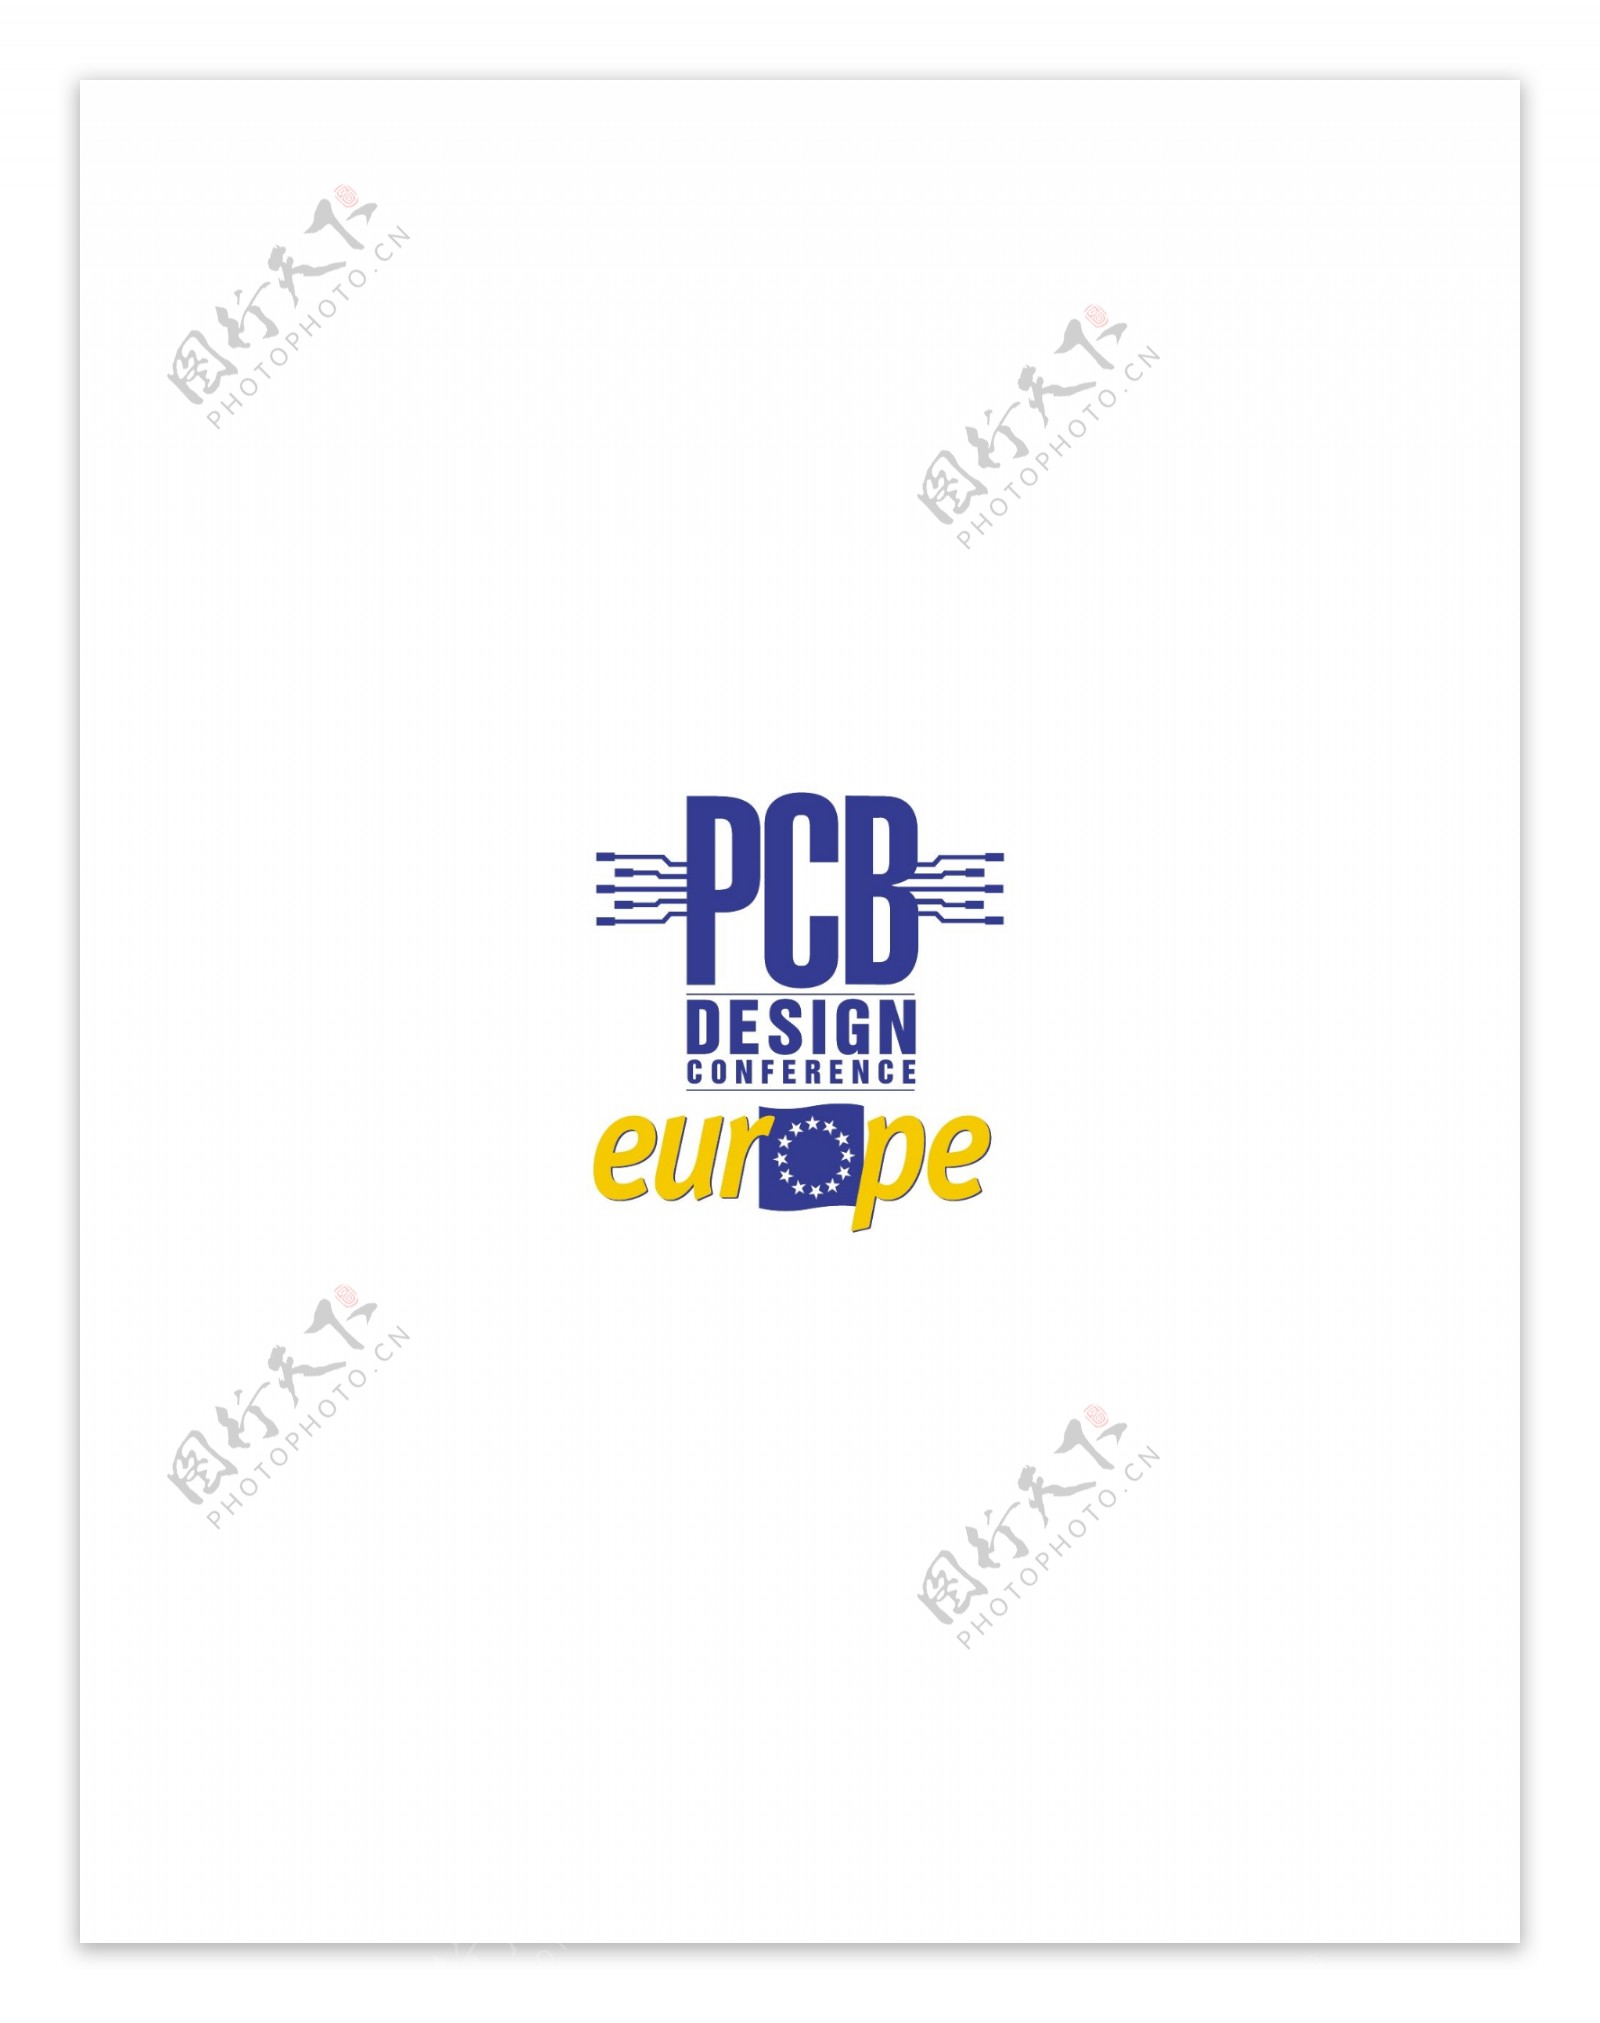 PCBDesignConferencelogo设计欣赏PCBDesignConference广告公司标志下载标志设计欣赏